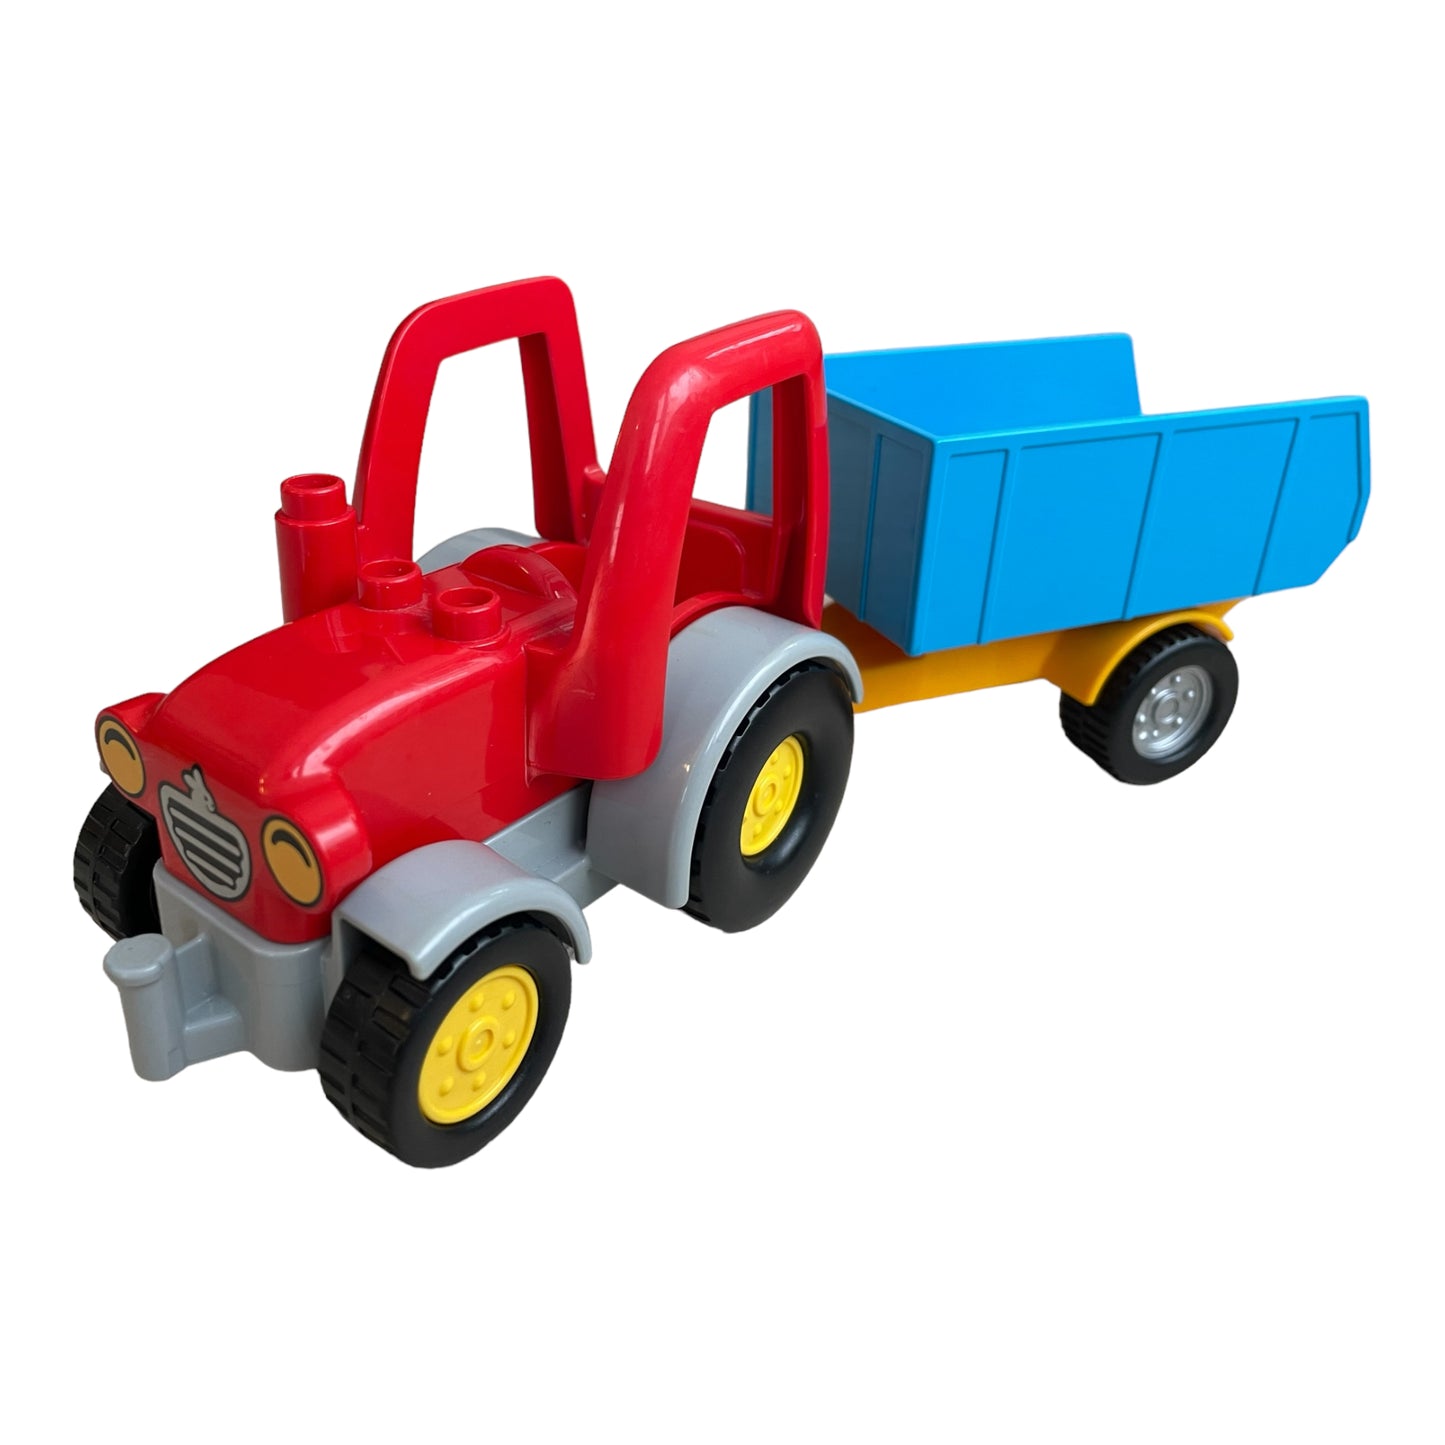 Lego Duplo ® - Farm Tractor - 10524